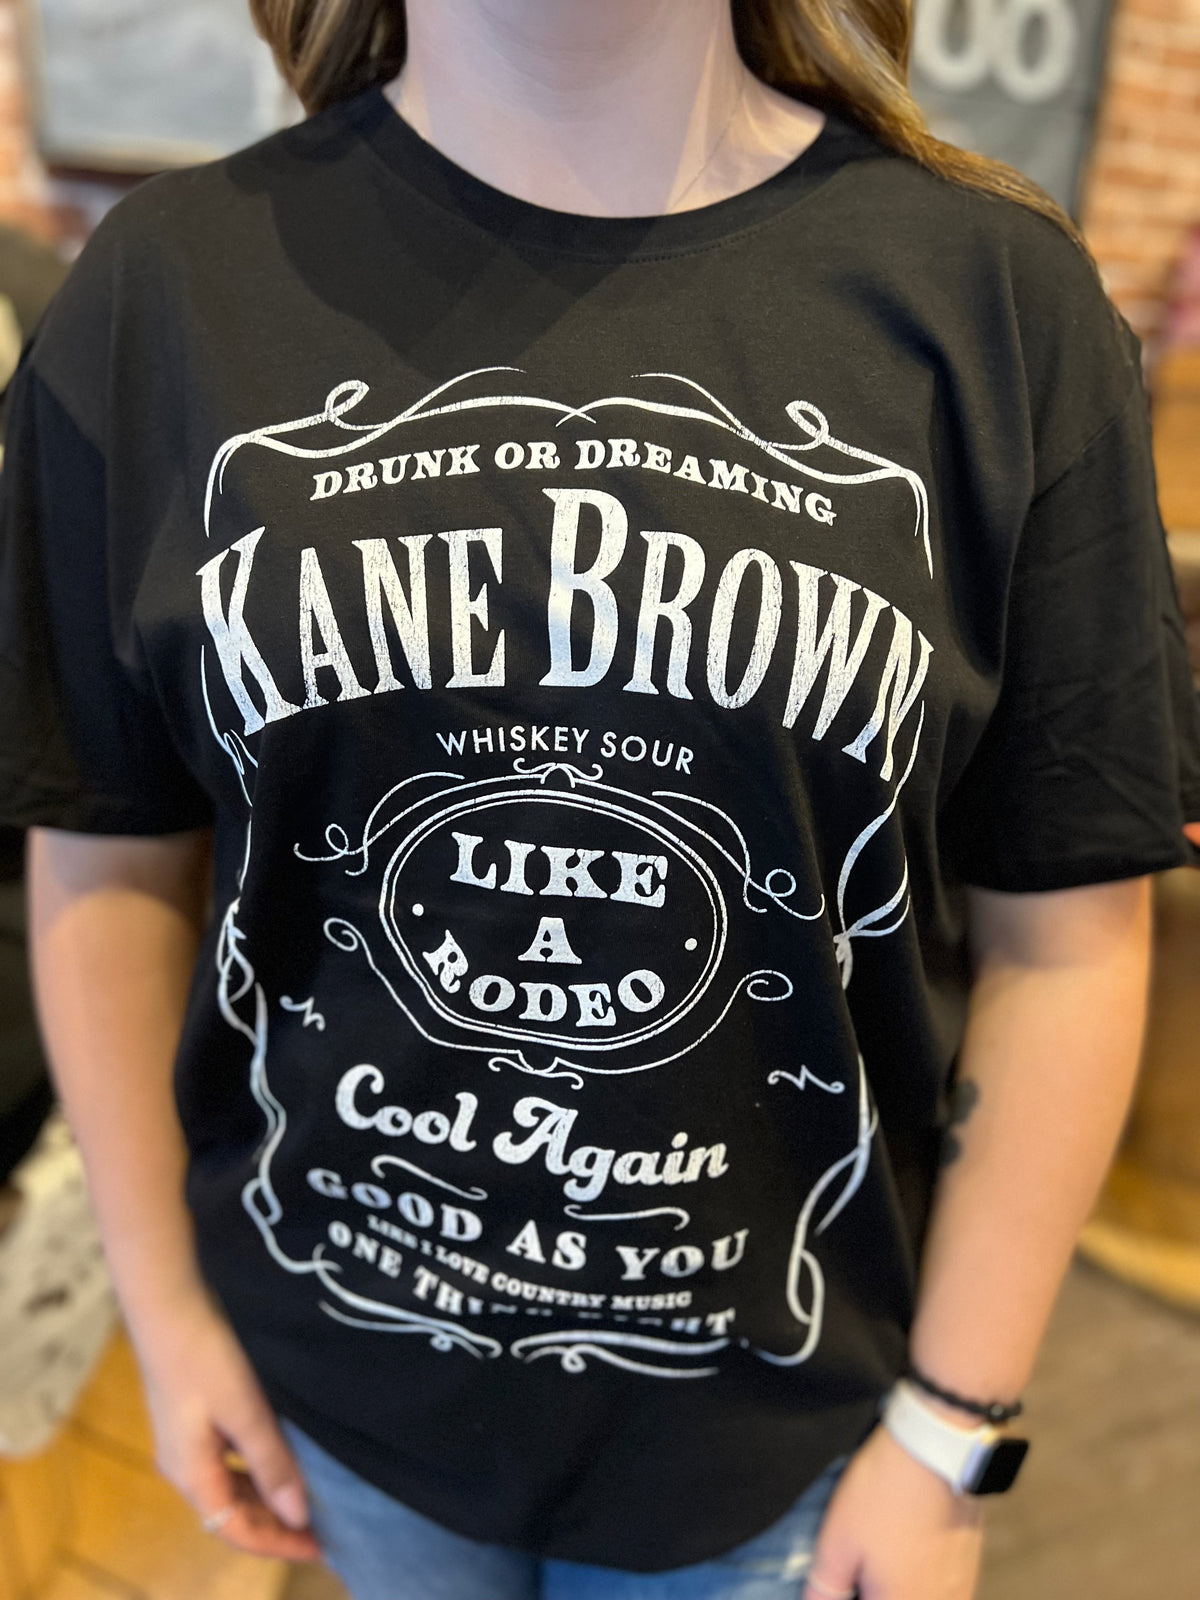 Kane brown graphic tee